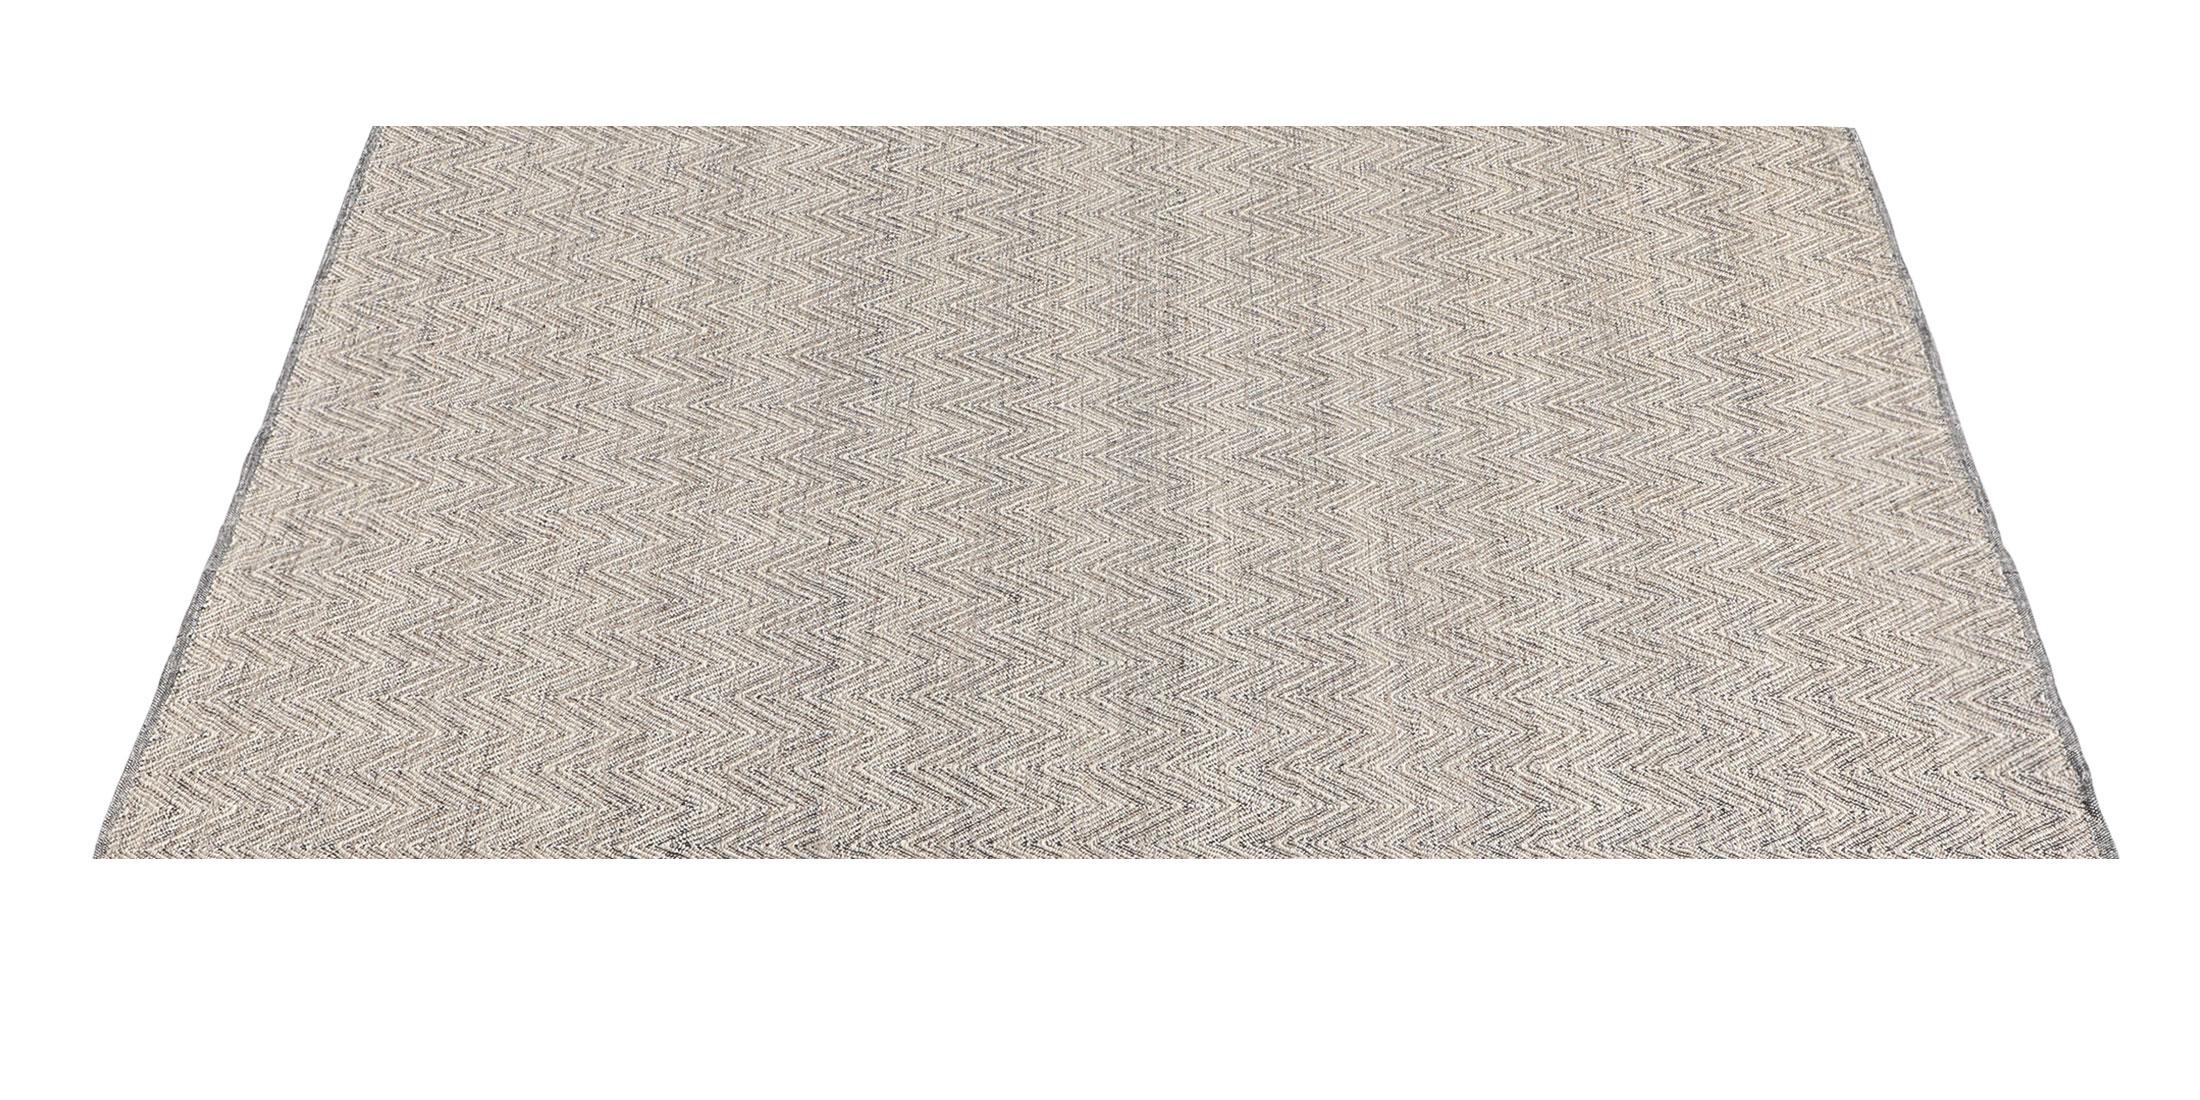 For Sale: Beige (Sand) Ben Soleimani Ceyah Rug– Hand-woven Plush Textured Wool + Linen Charcoal 10'x14' 2